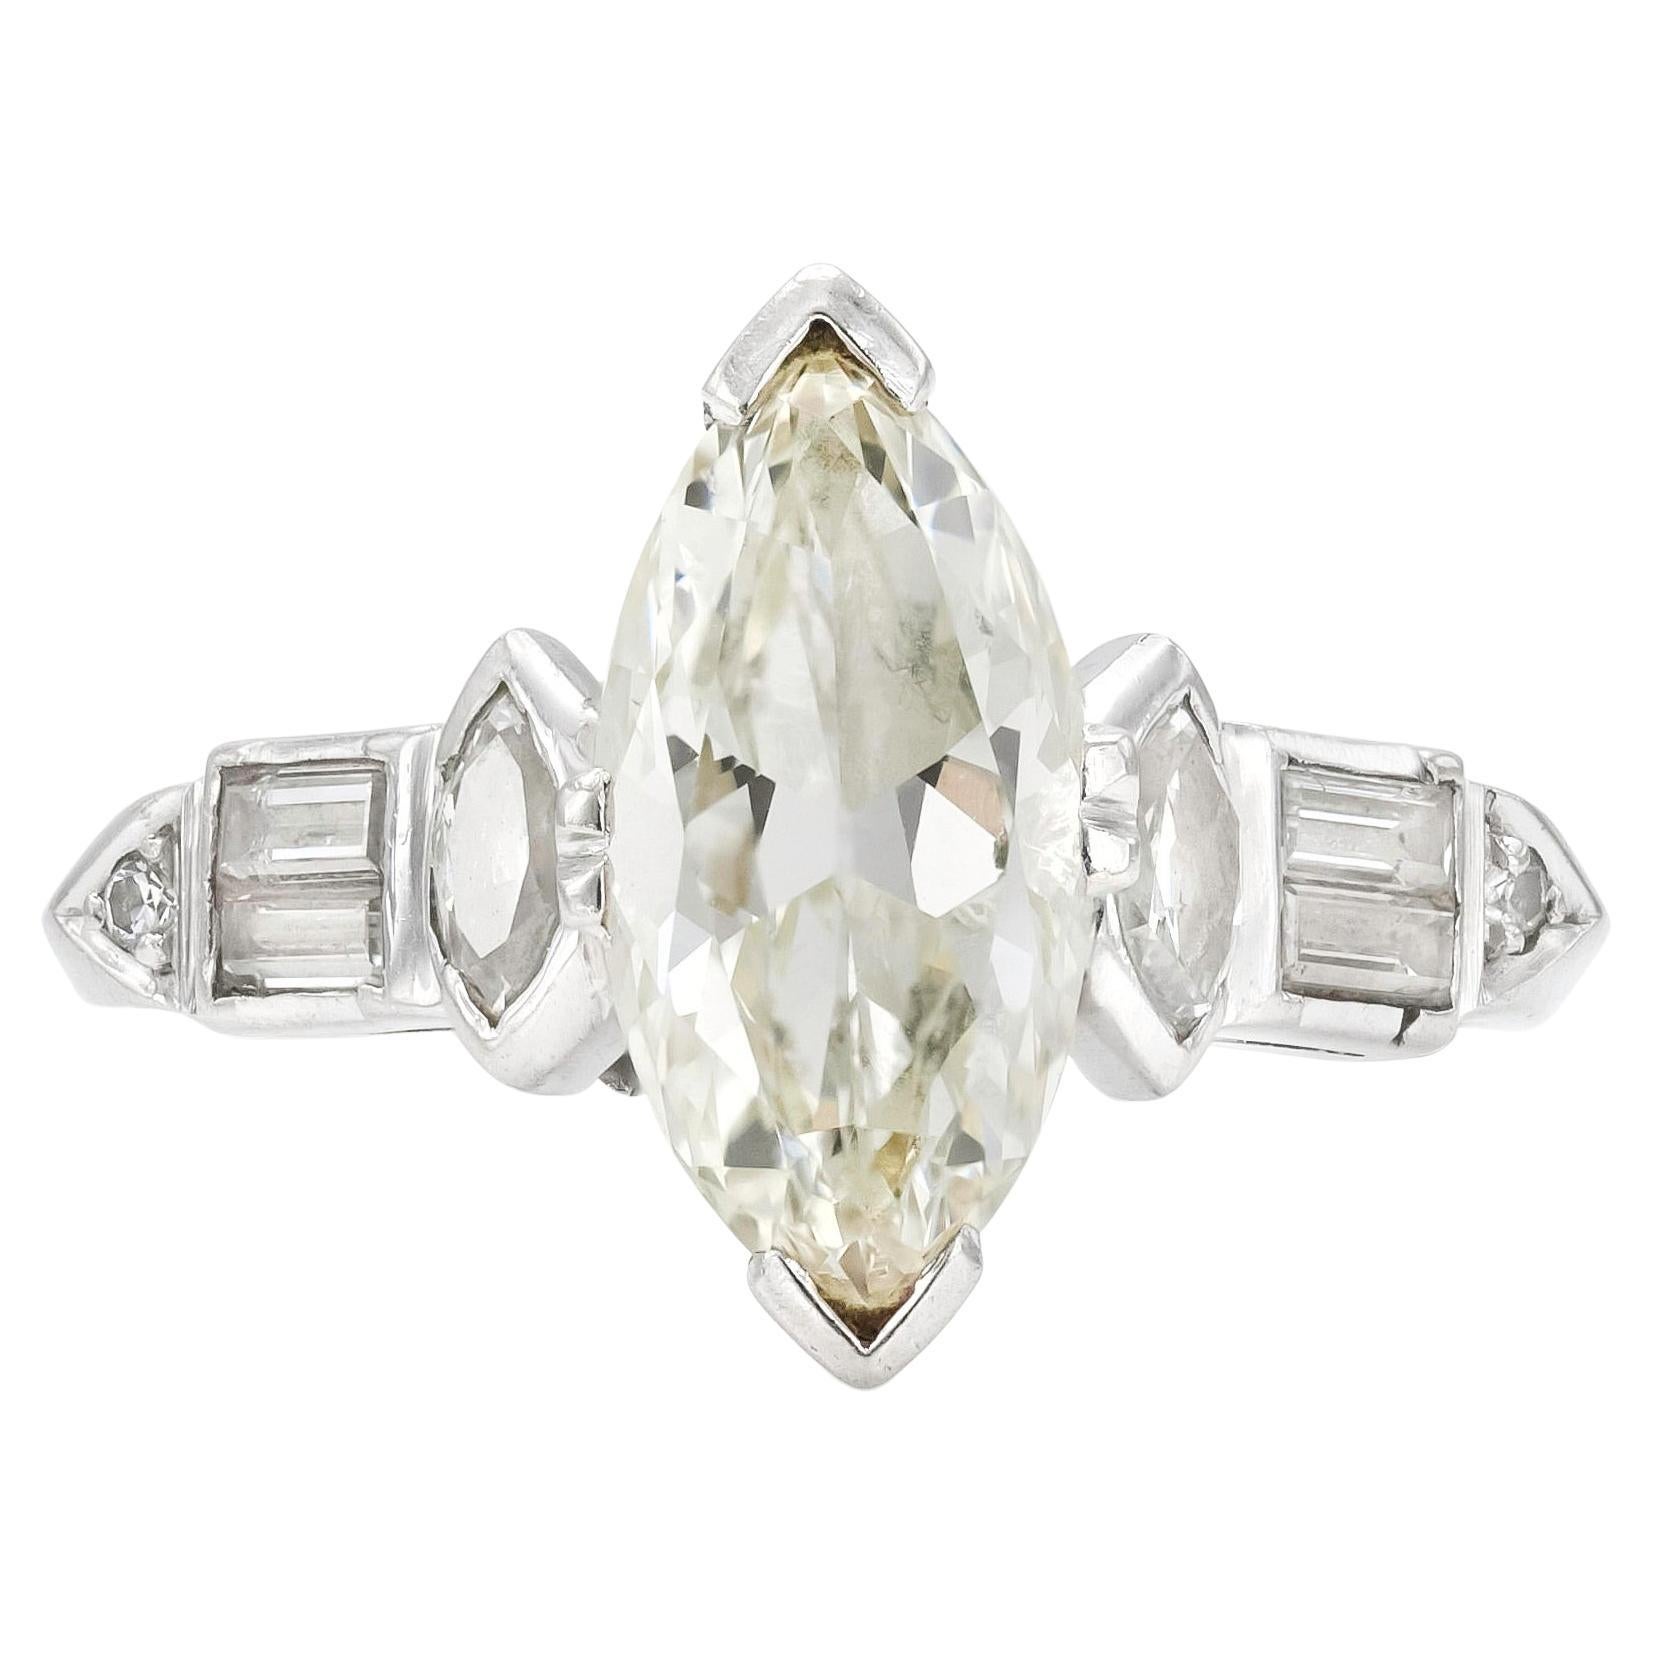 2.09 Carat Marquise Cut Diamond Engagement Ring